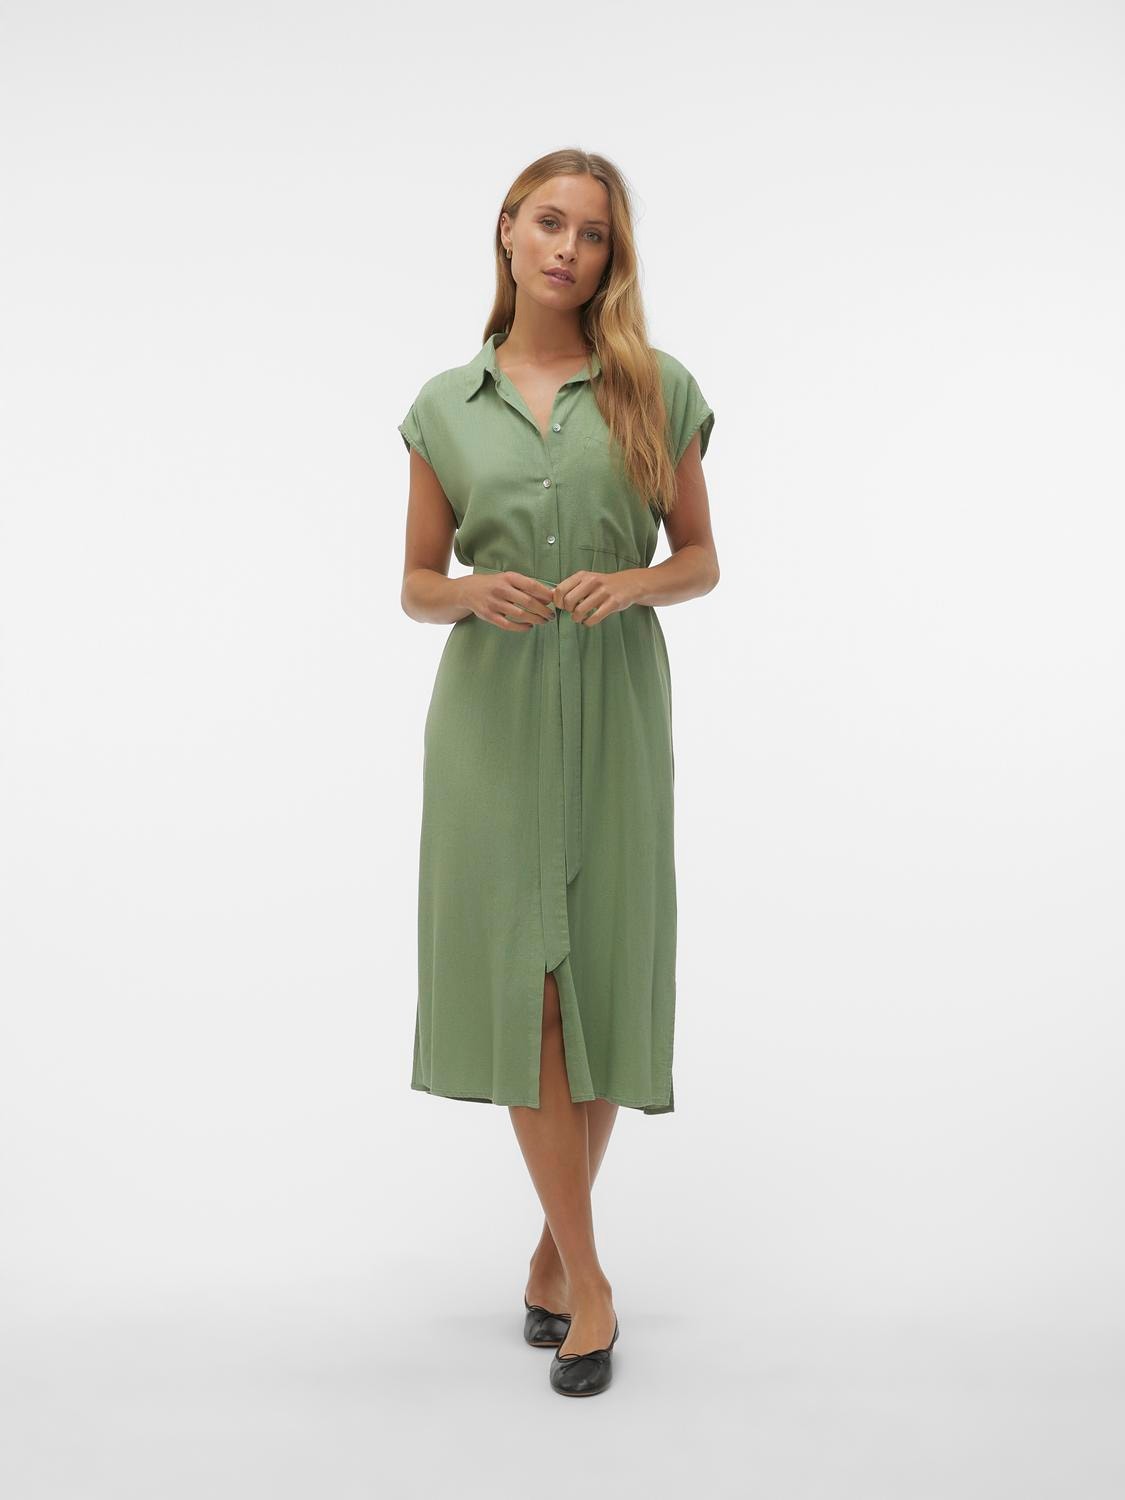 Vero Moda VMMYMILO Long dress -Hedge Green - 10282532